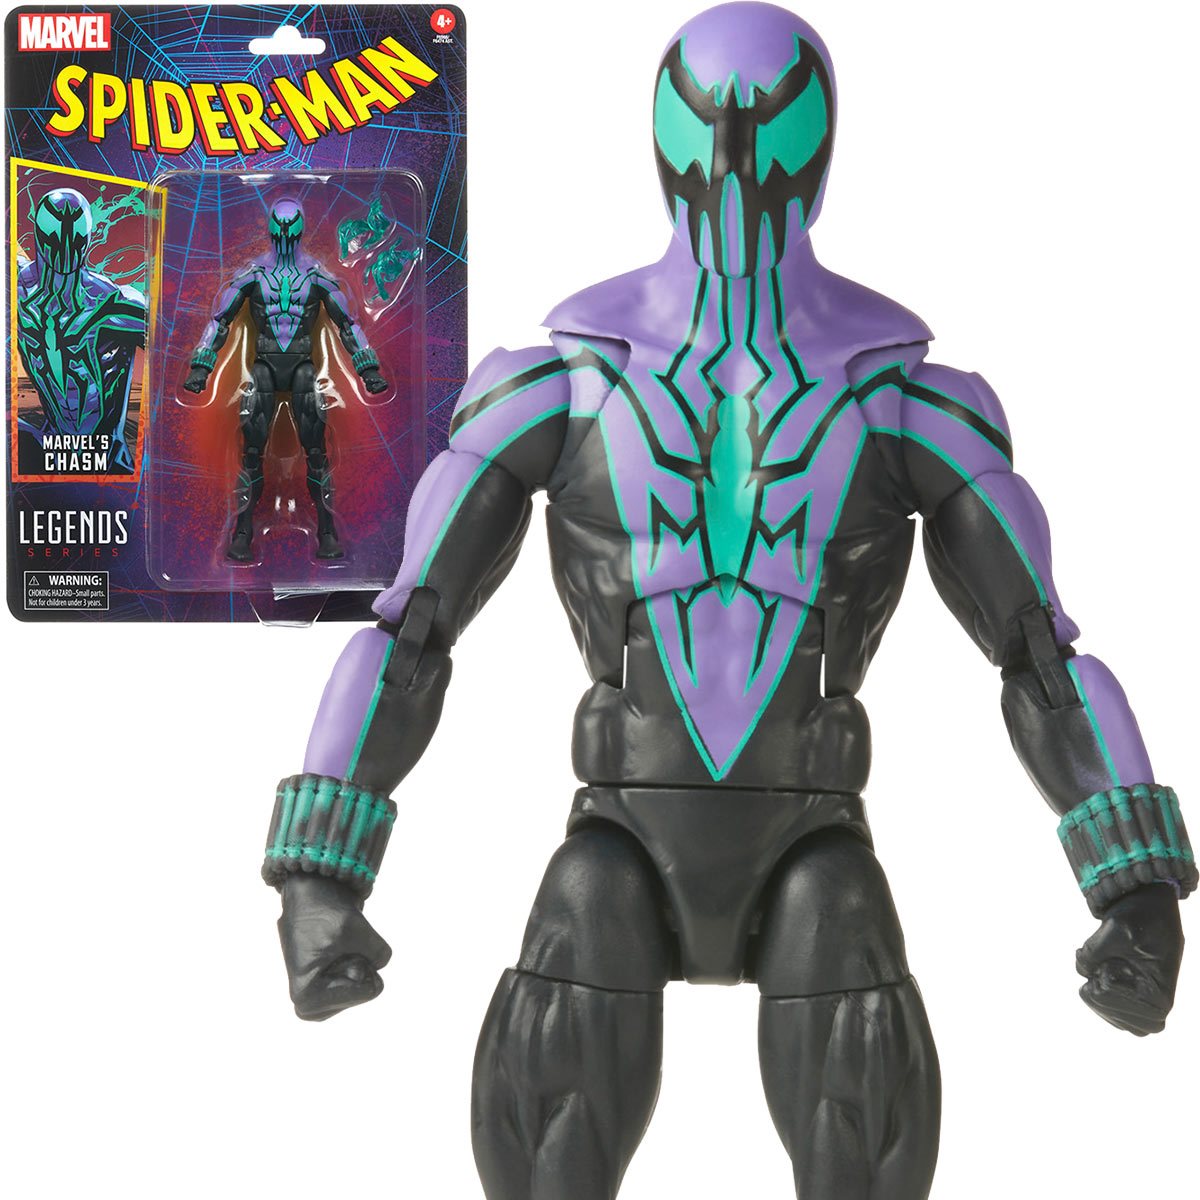 Spider Man Retro Marvel Legends Chasm Inch Action Figure